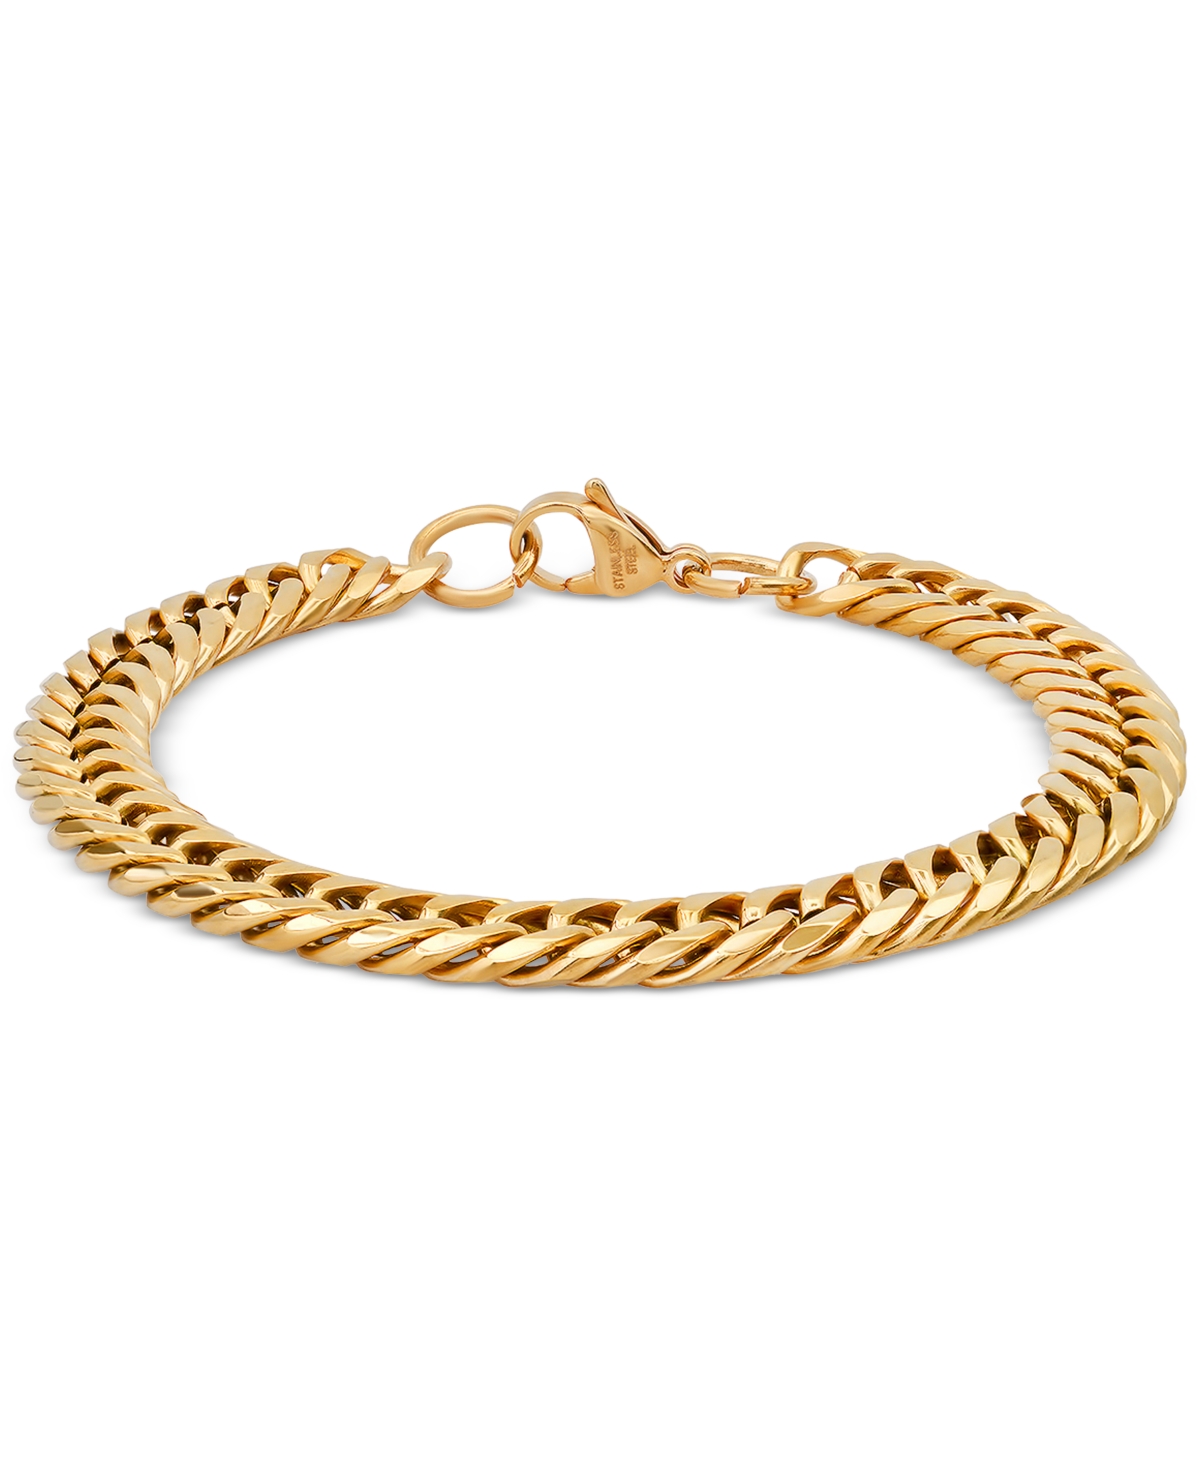 Steeltime Men's Stainless Steel Cuban Link Chain Bracelet In Gold